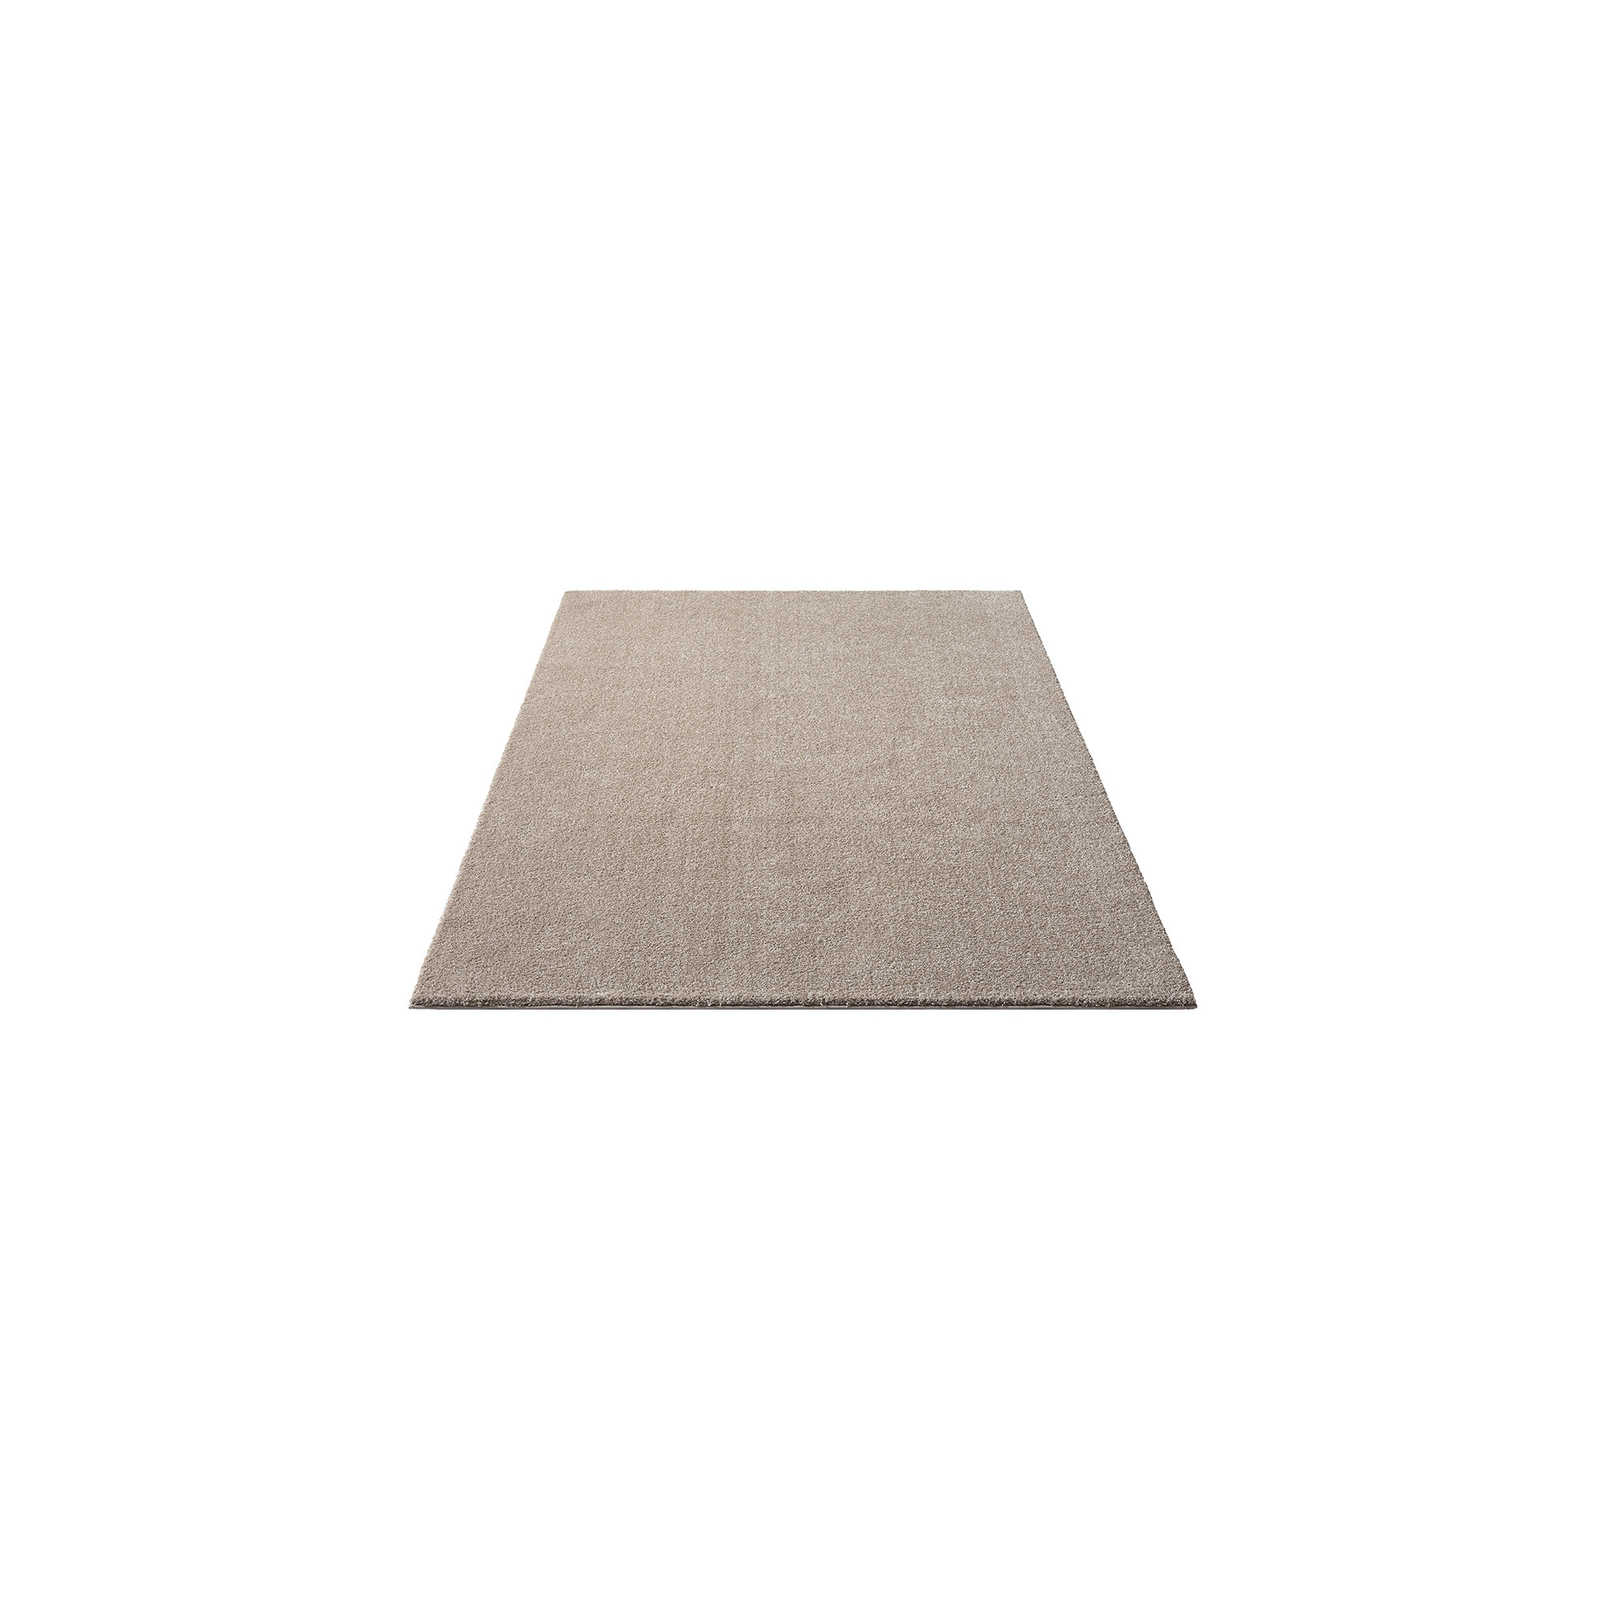 Soft short pile carpet in beige - 150 x 80 cm
